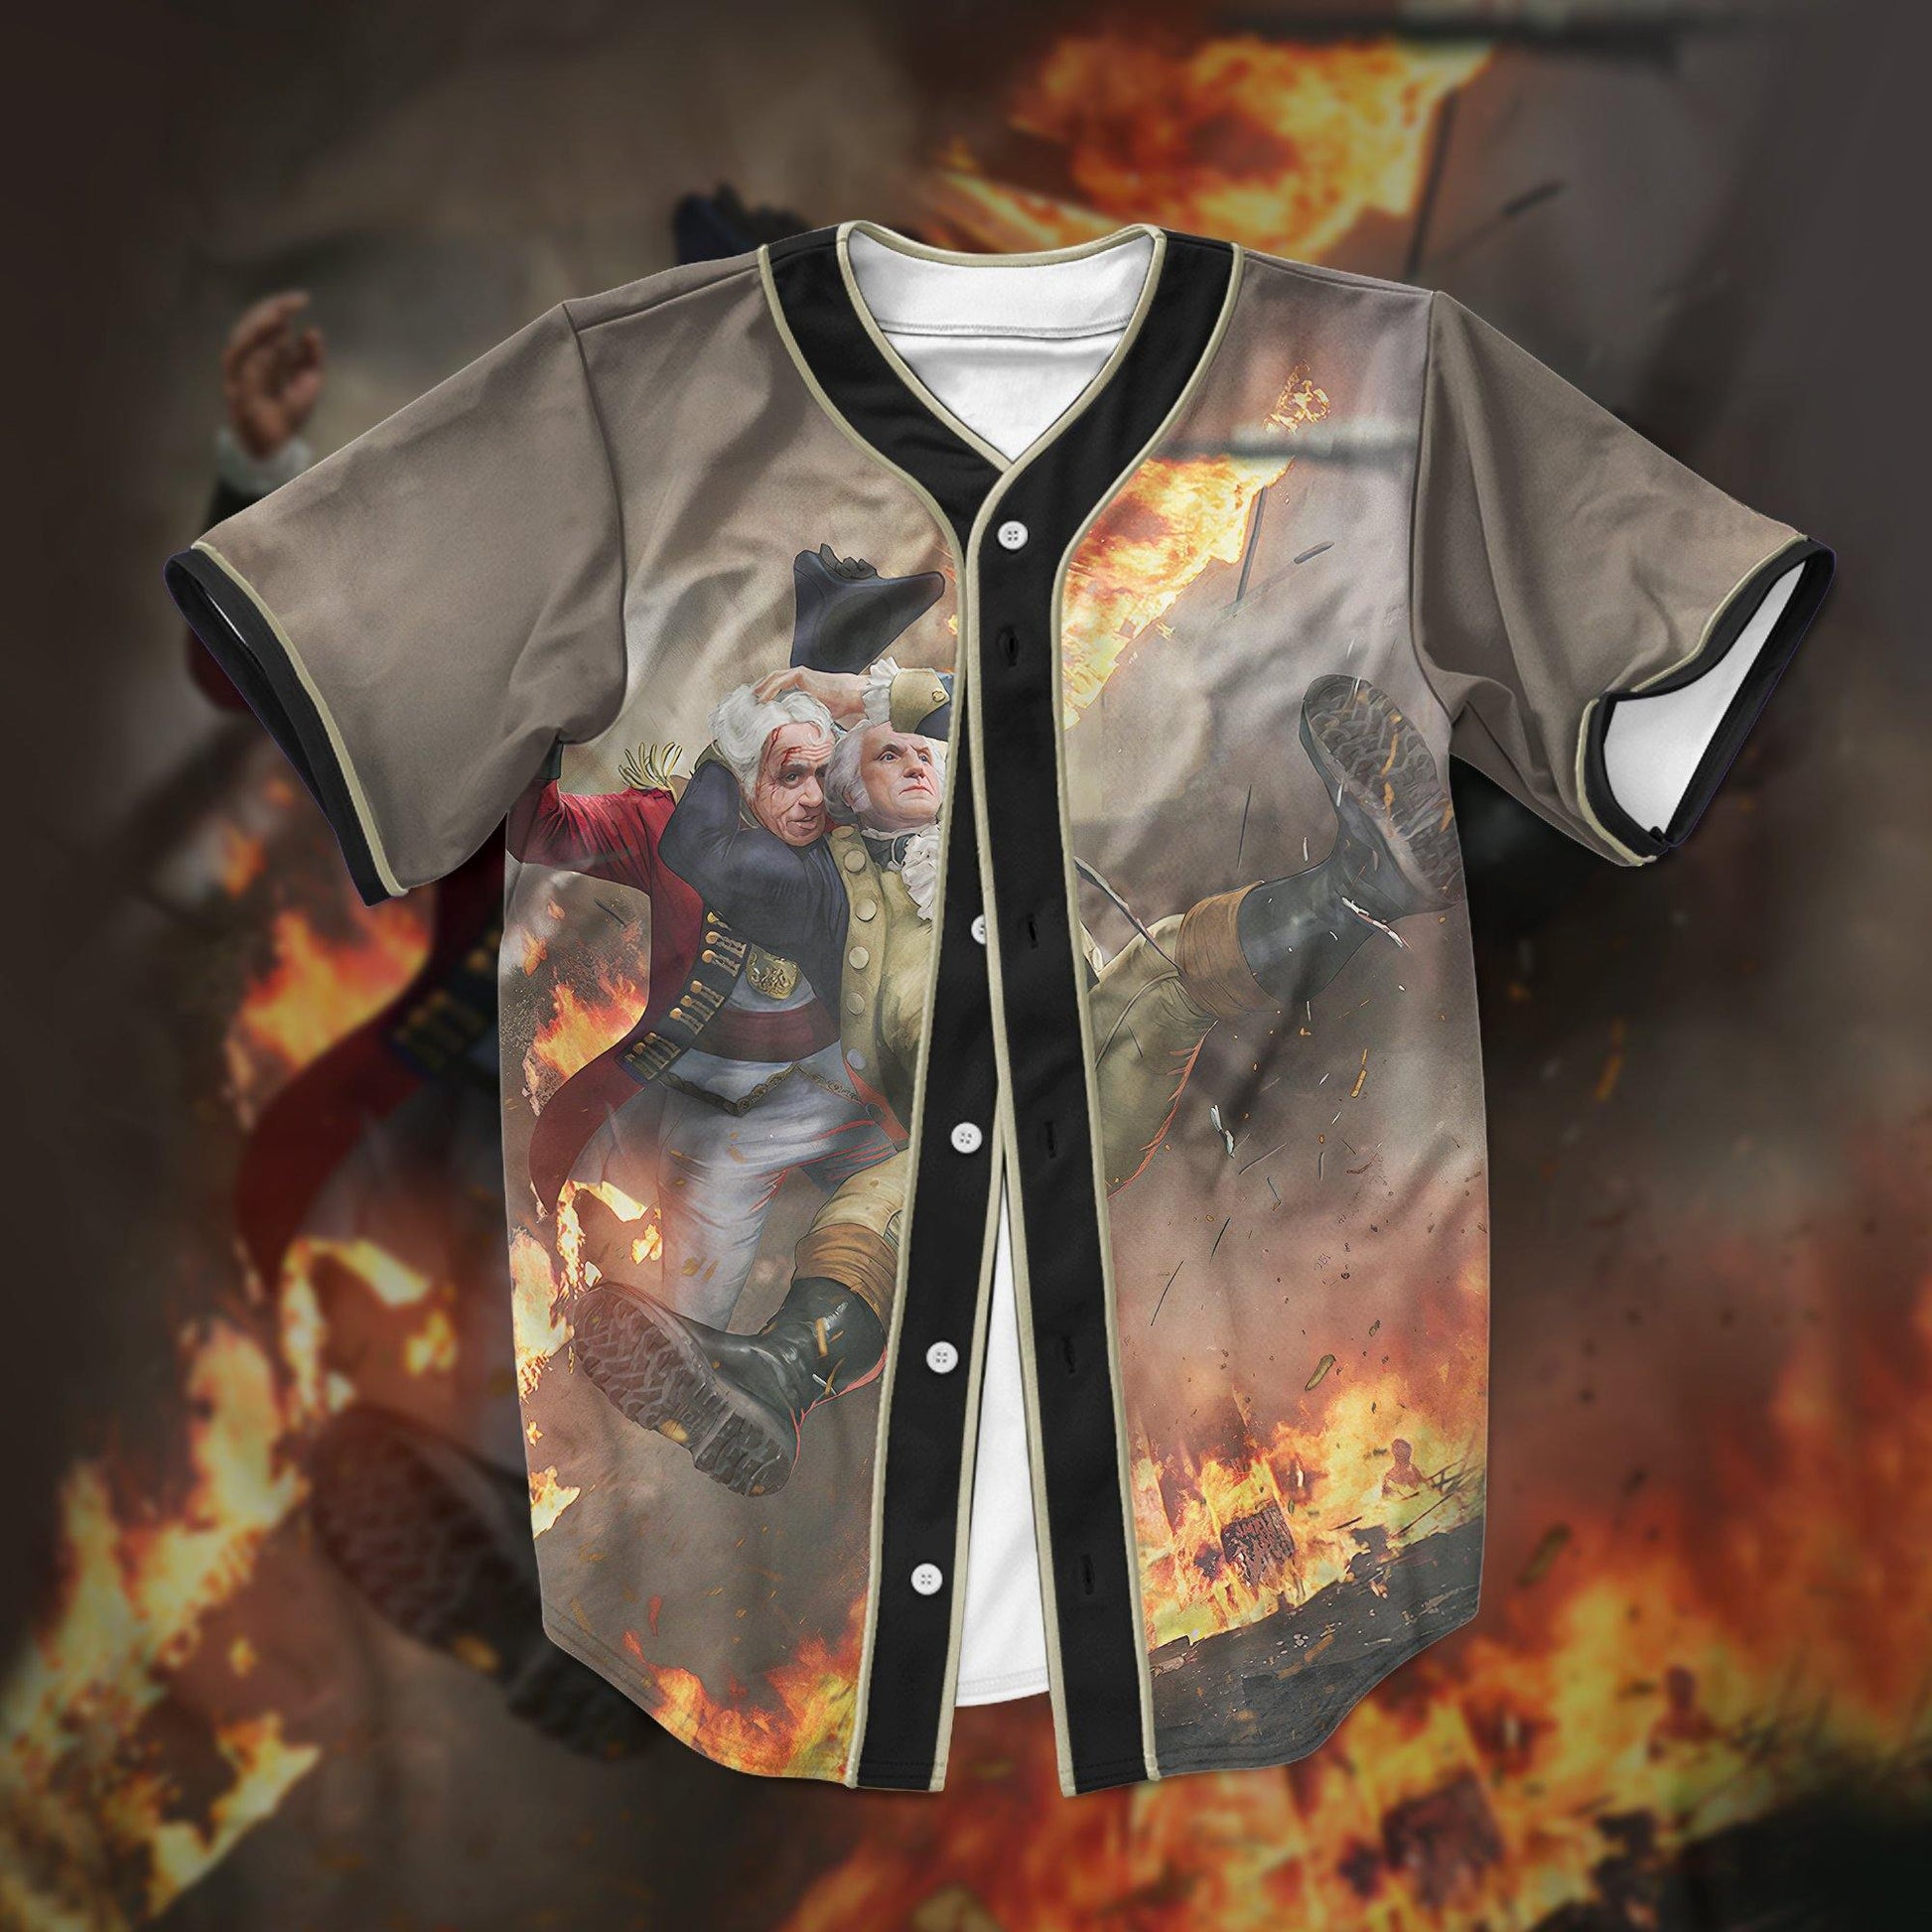 Gearhuman 3D George Washington Stunner Custom Jersey Shirt GW0107217 Jersey Shirt 